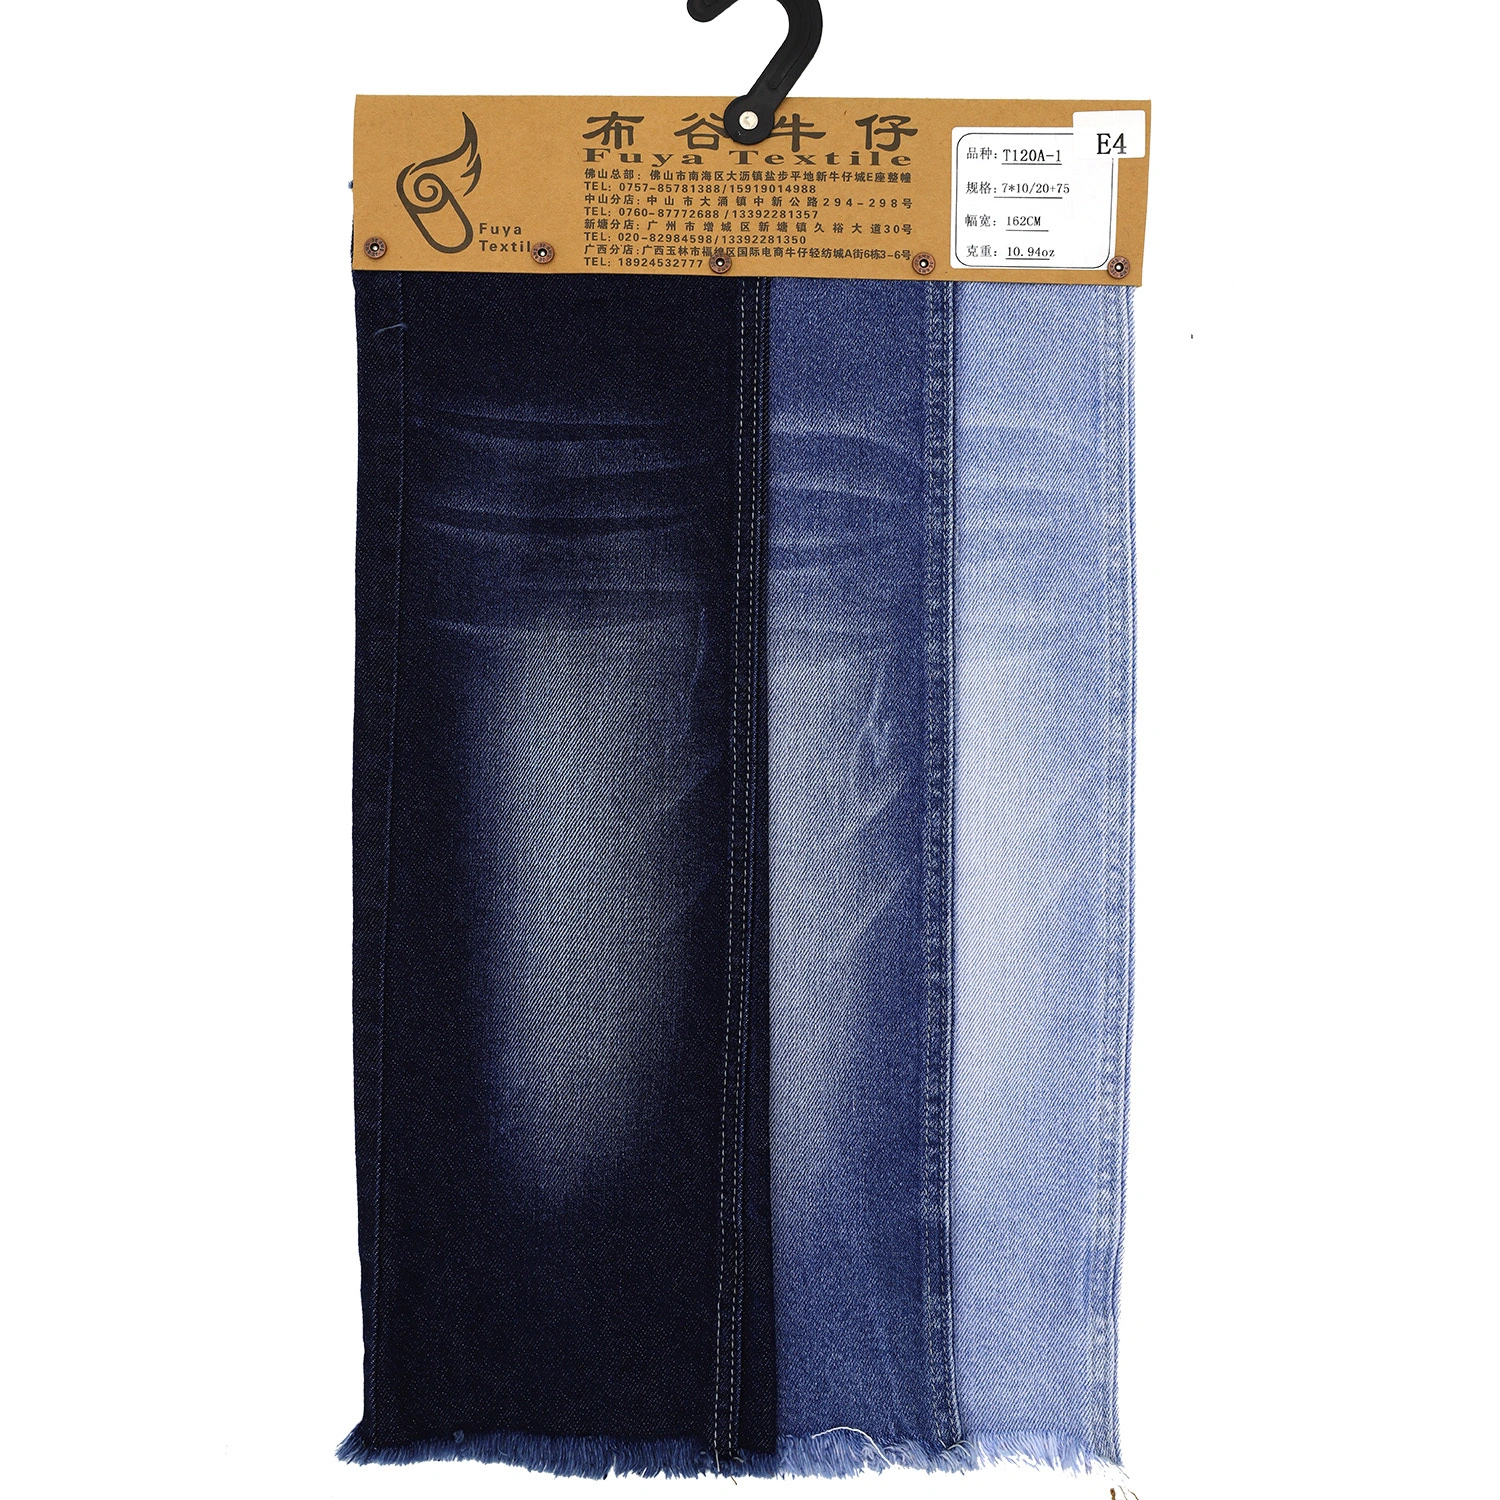 T120A-1 sky blue 10oz denim fabric stretchable with spandex 1